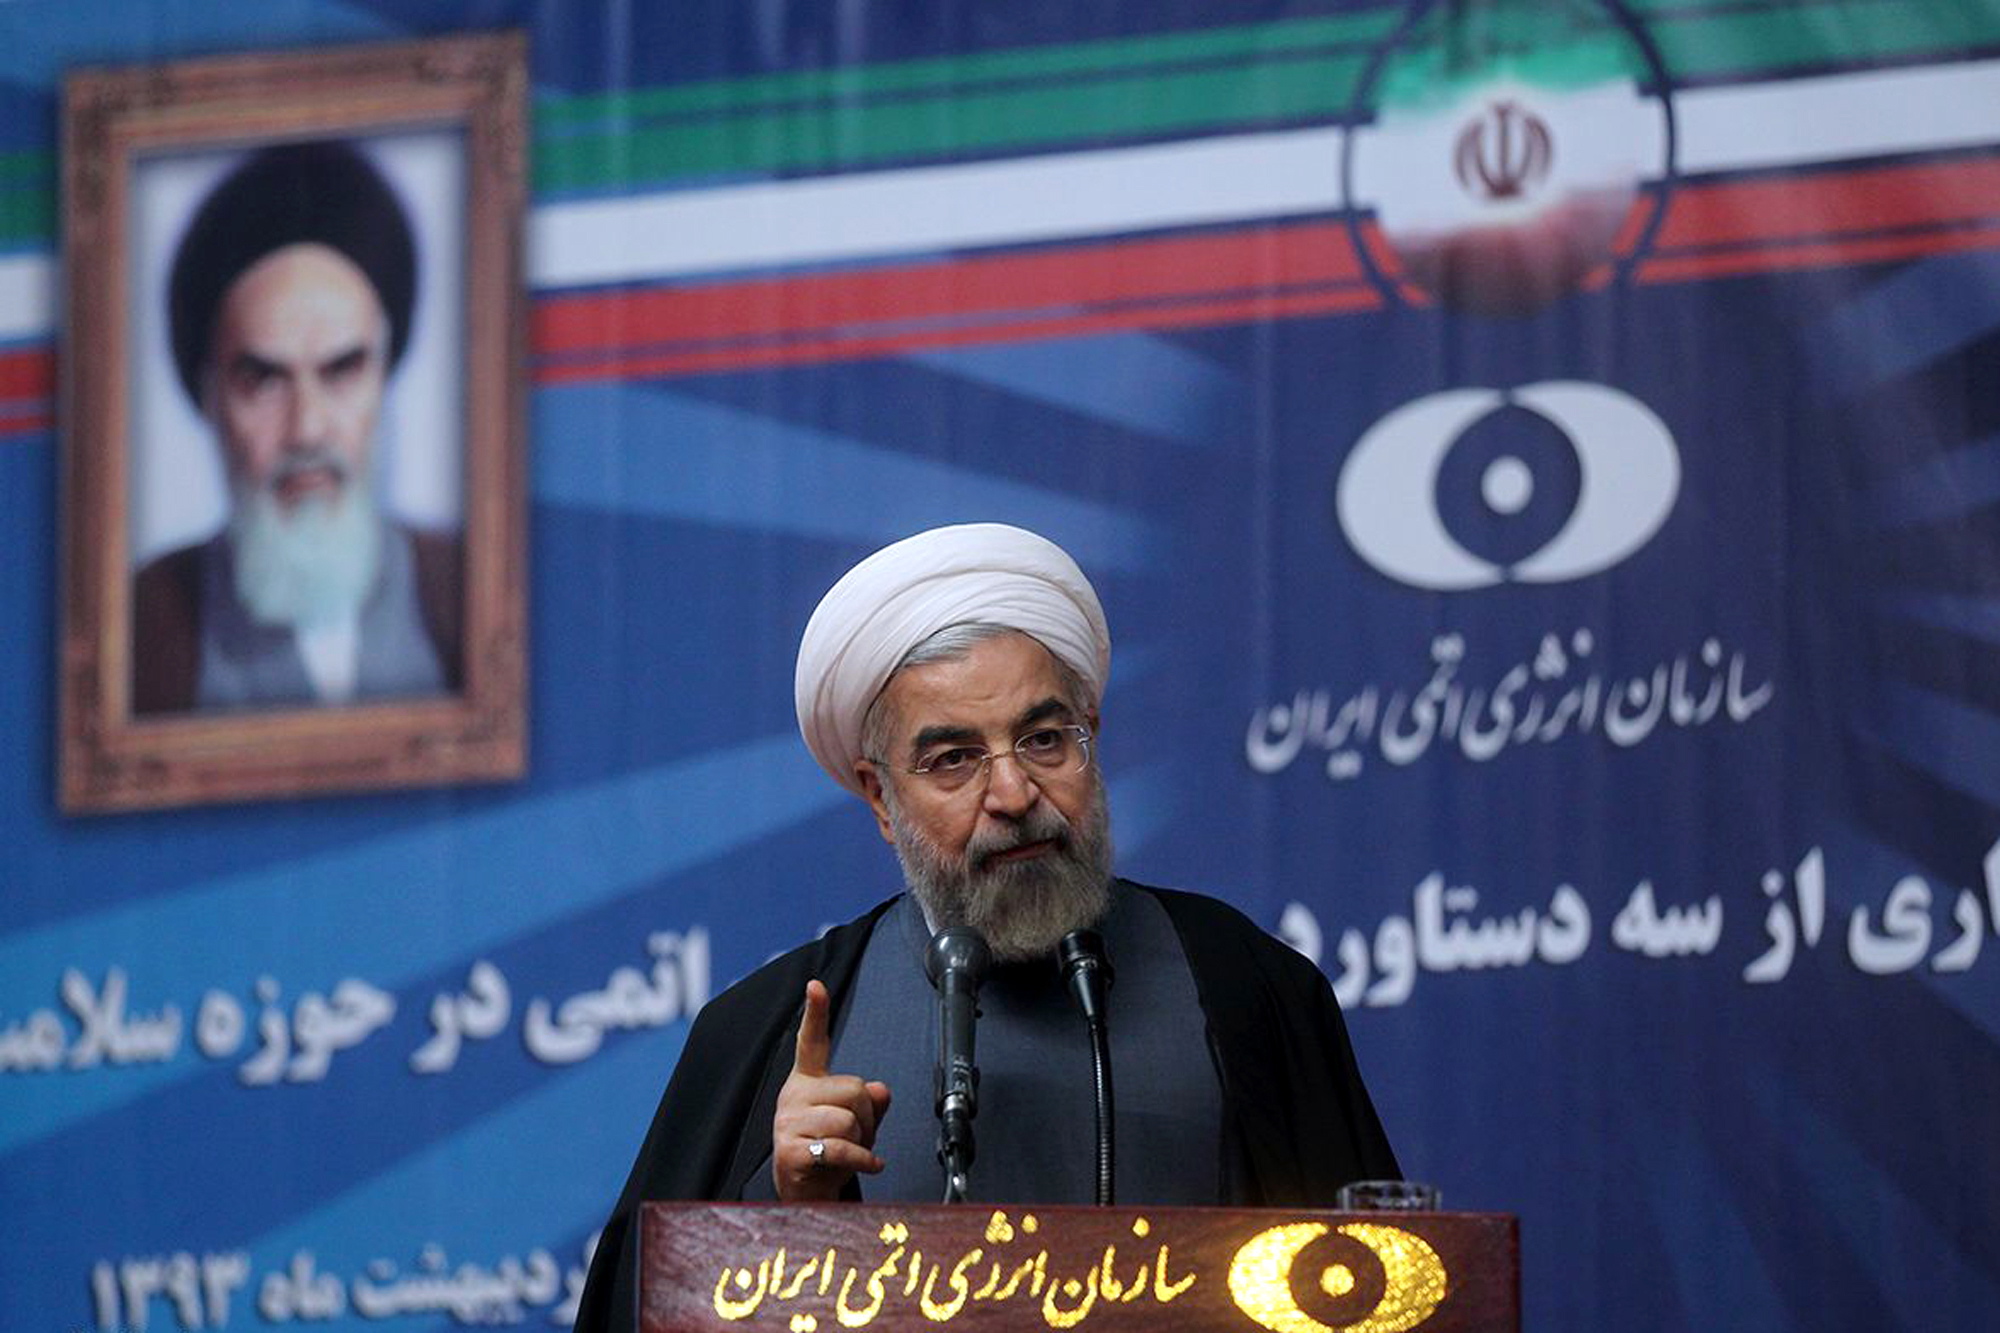 Hassan Rouhani
Iranian president